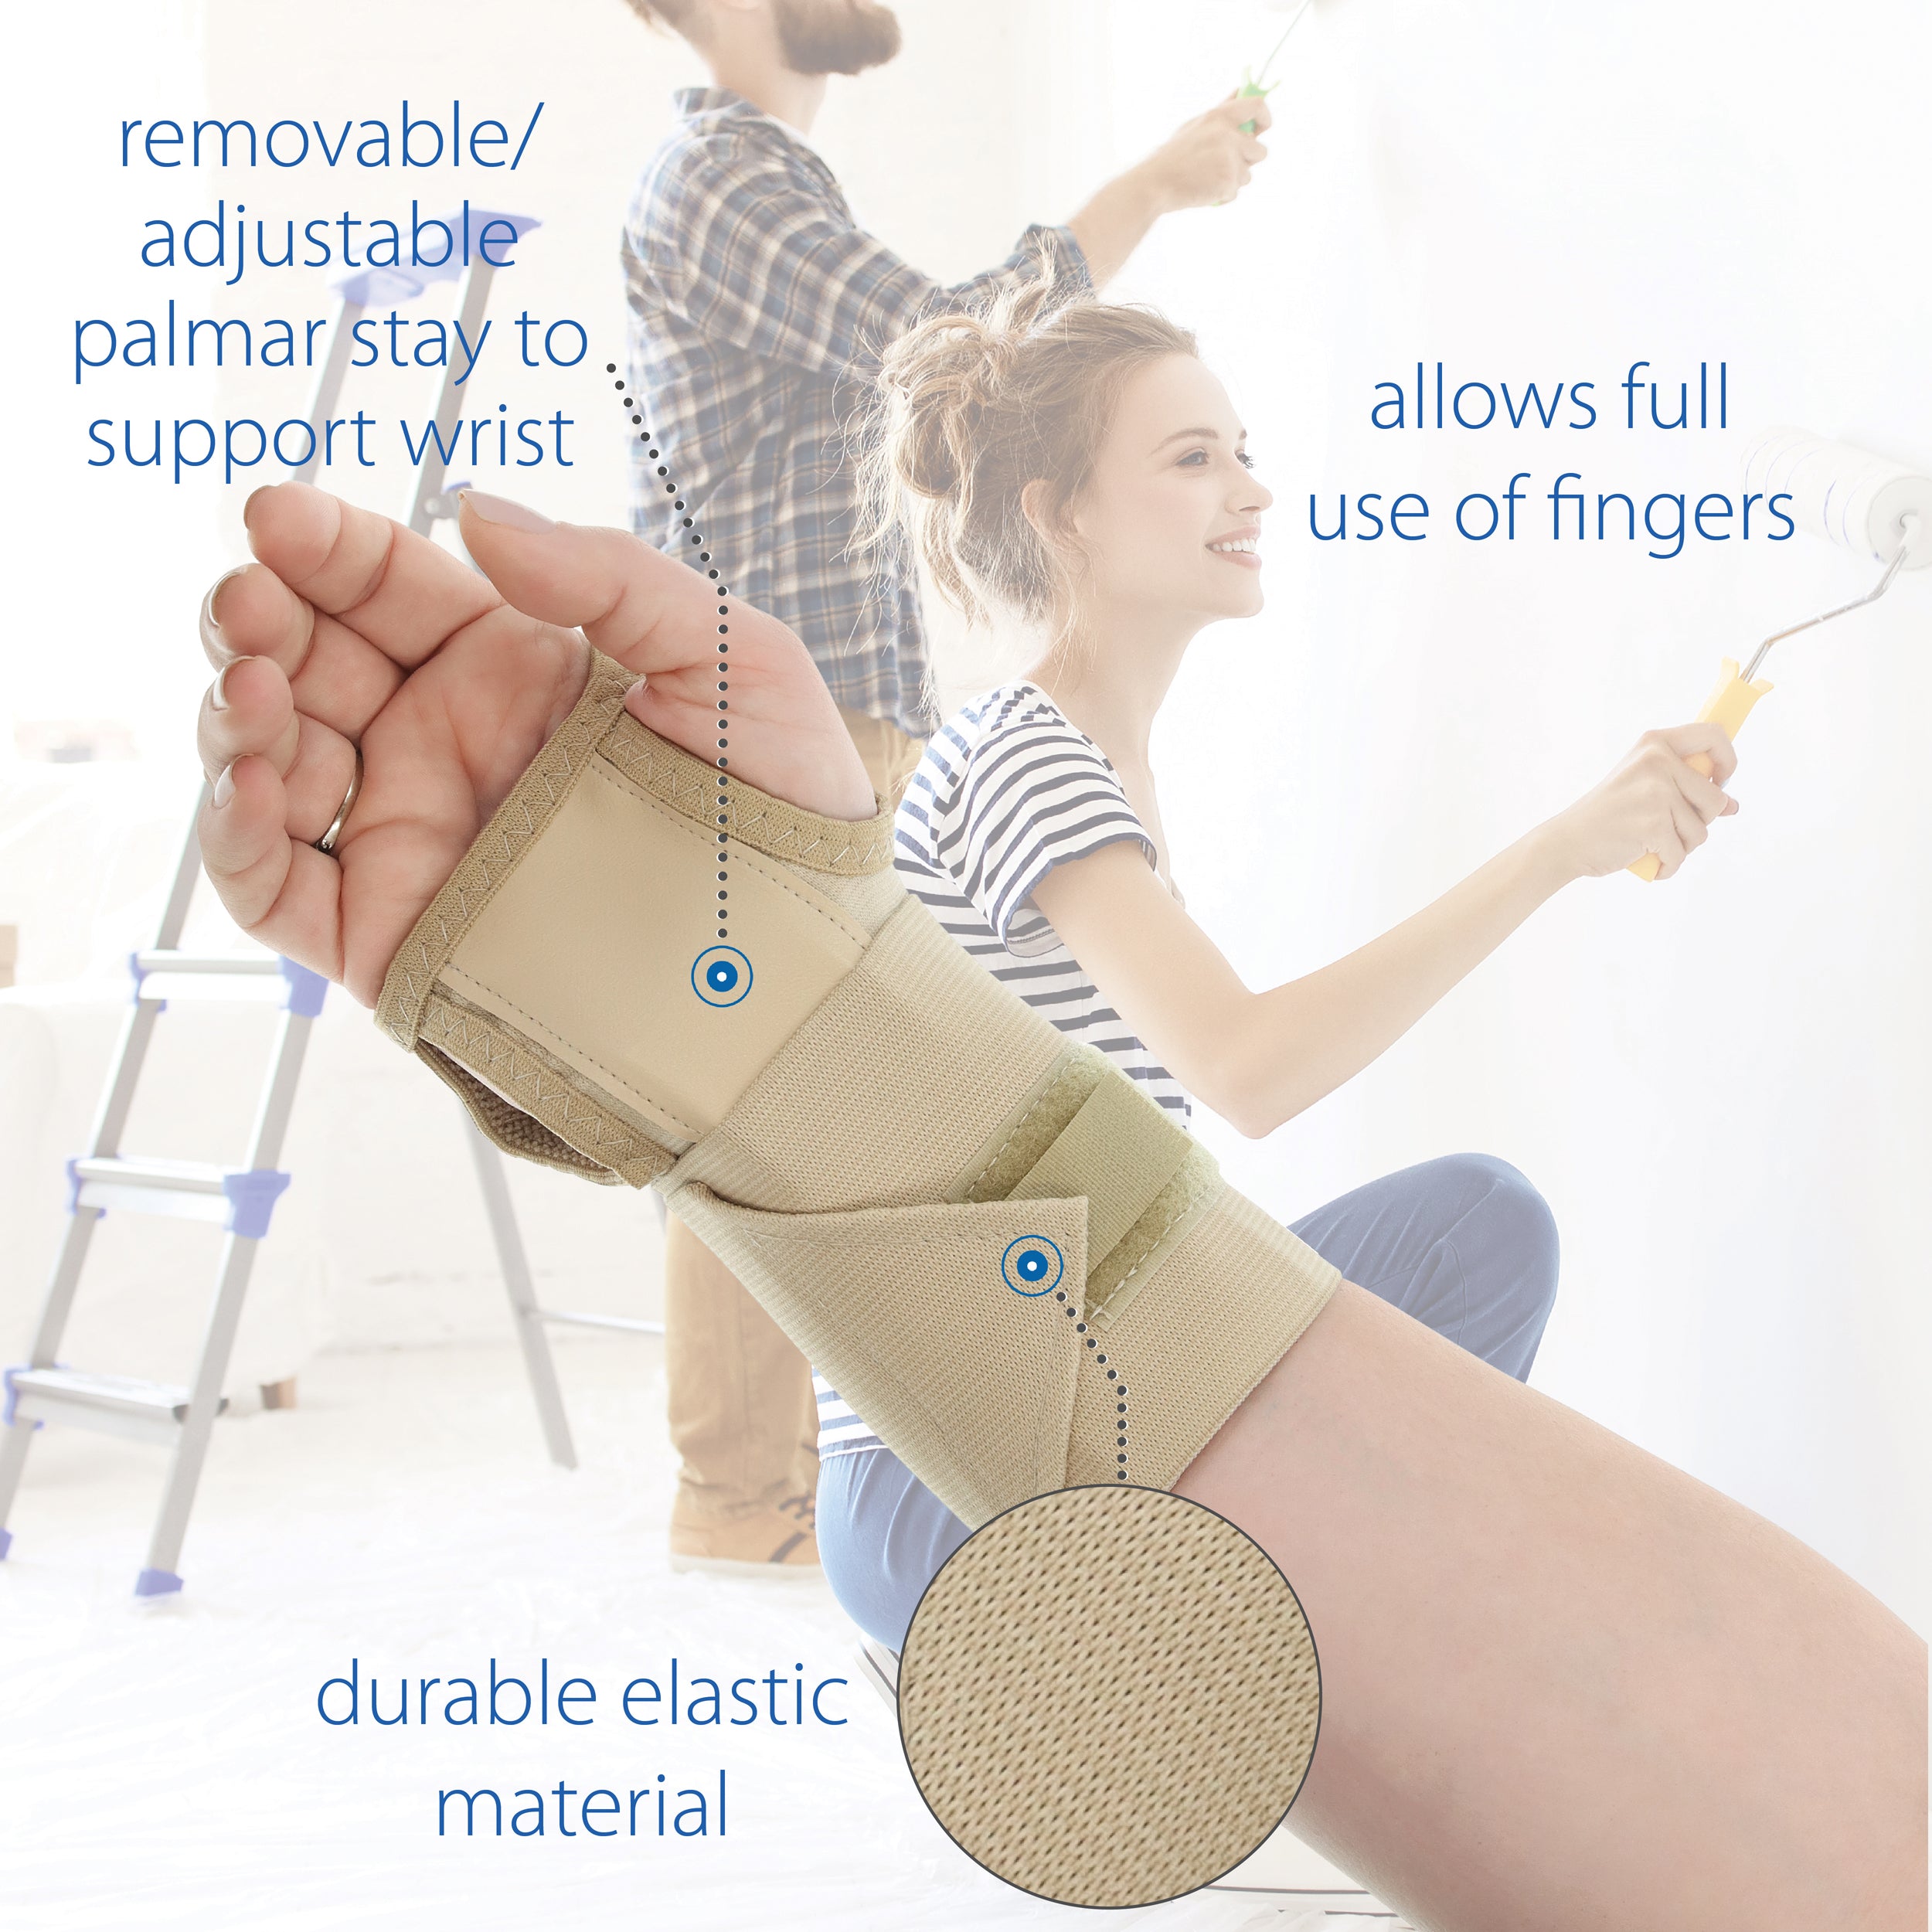 Swede-O Adjustable Bilateral Wrist Brace